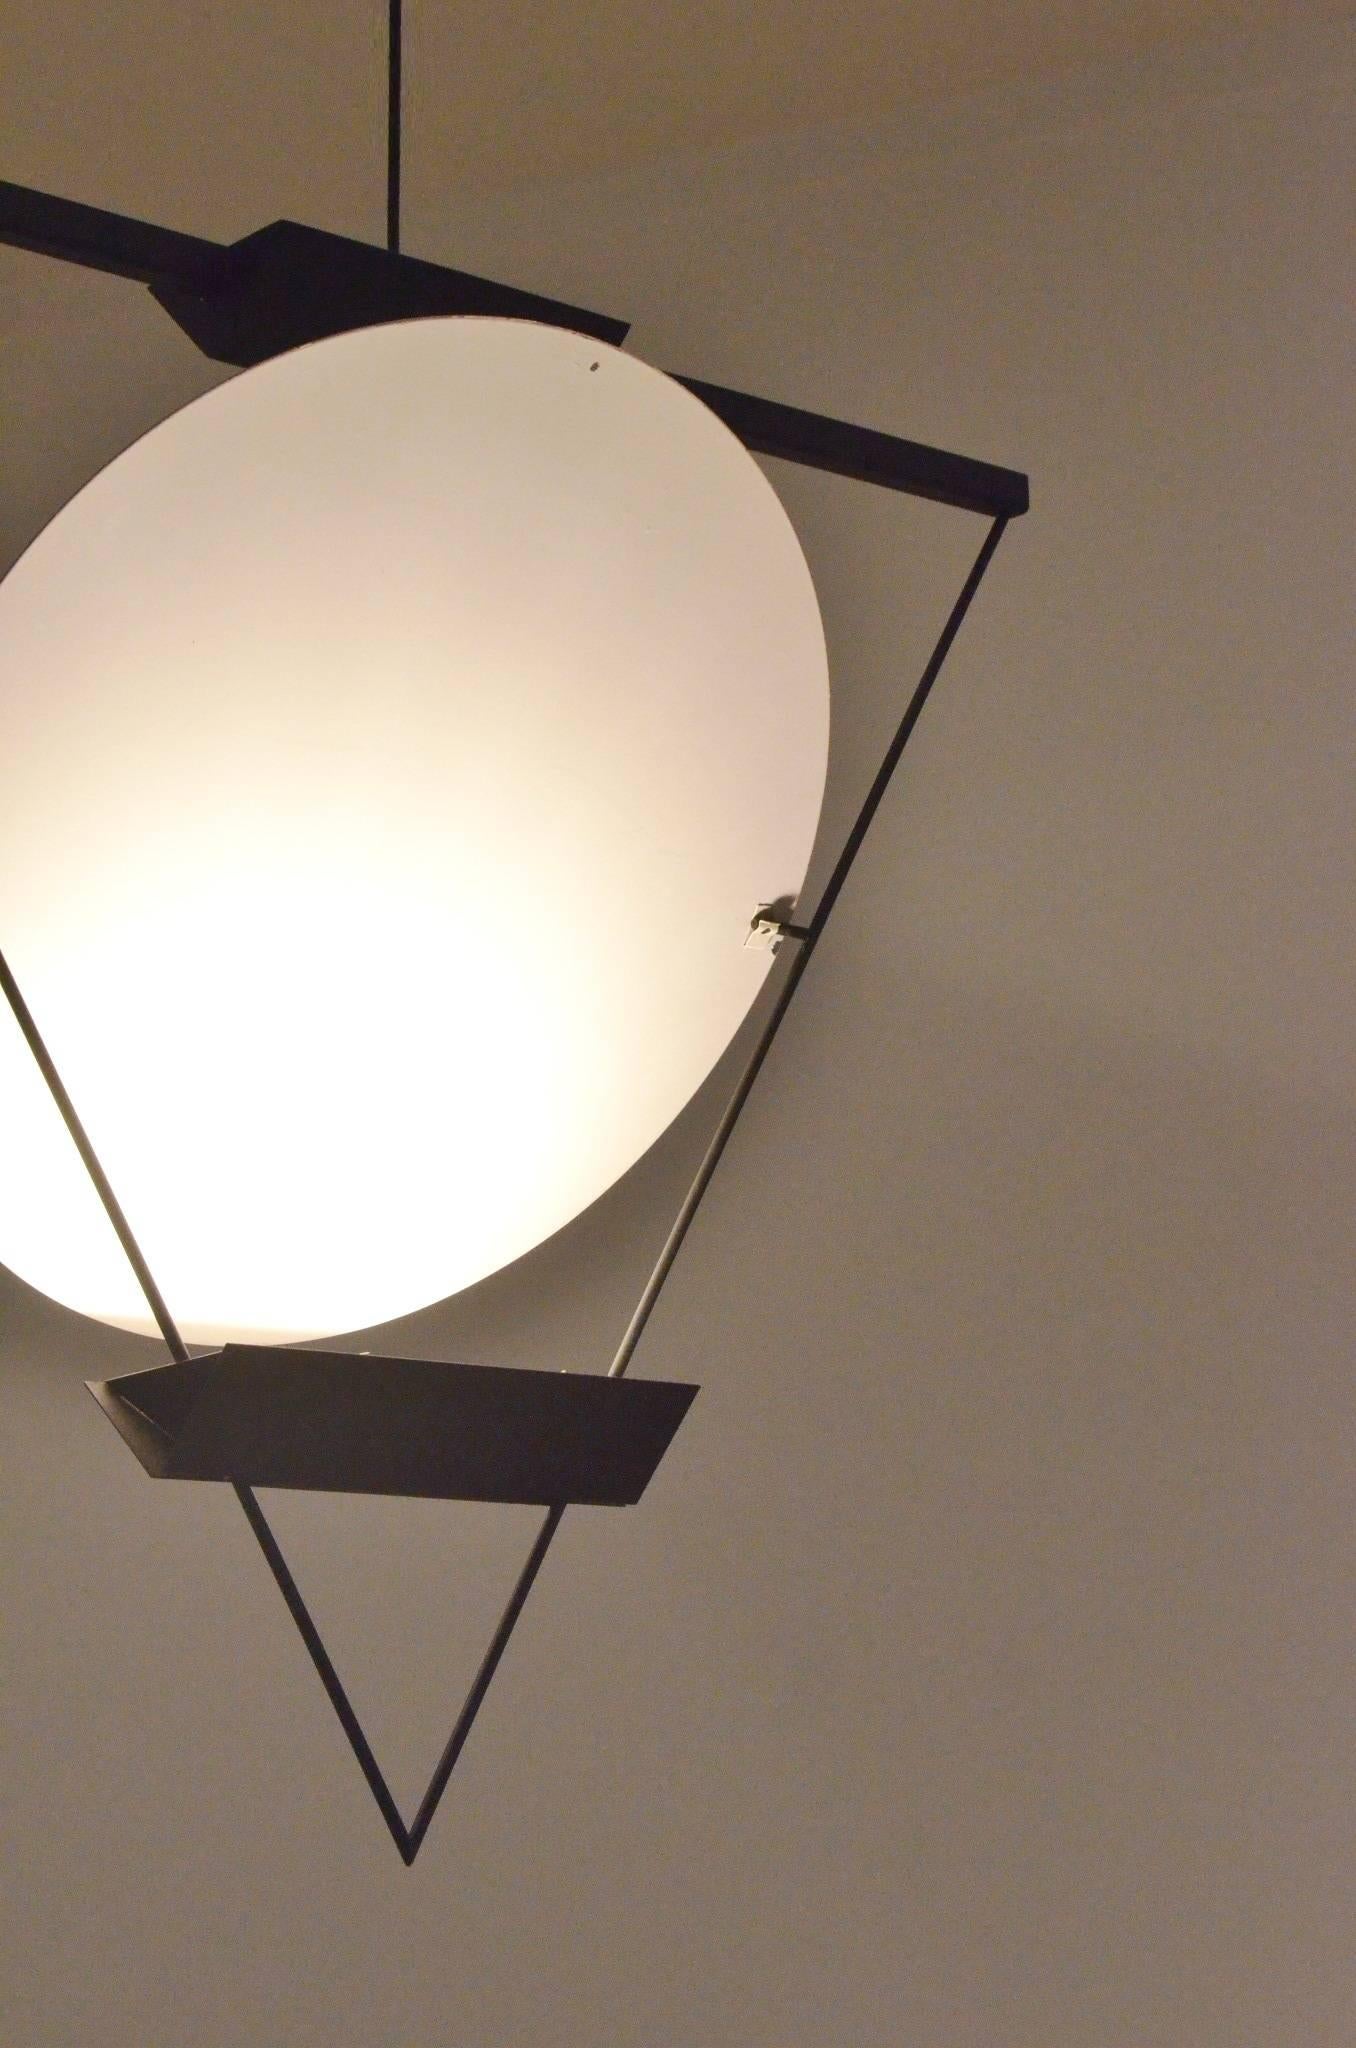 Lacquered Italian Design Mario Botta for Artemide Triangle Pendant Lamp